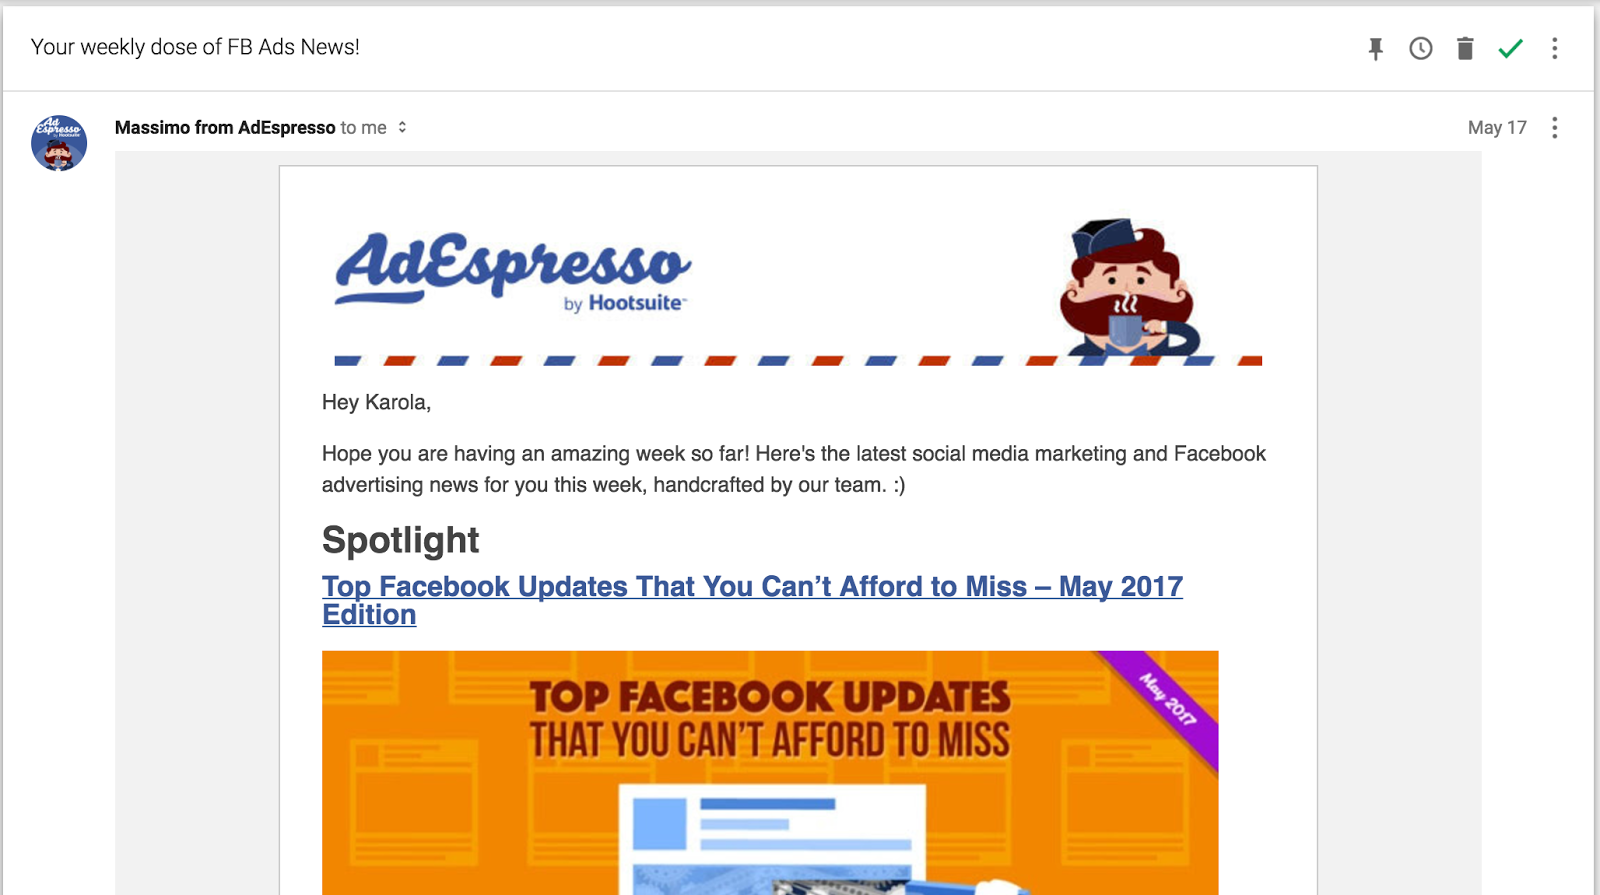 AdEspresso’s marketing email